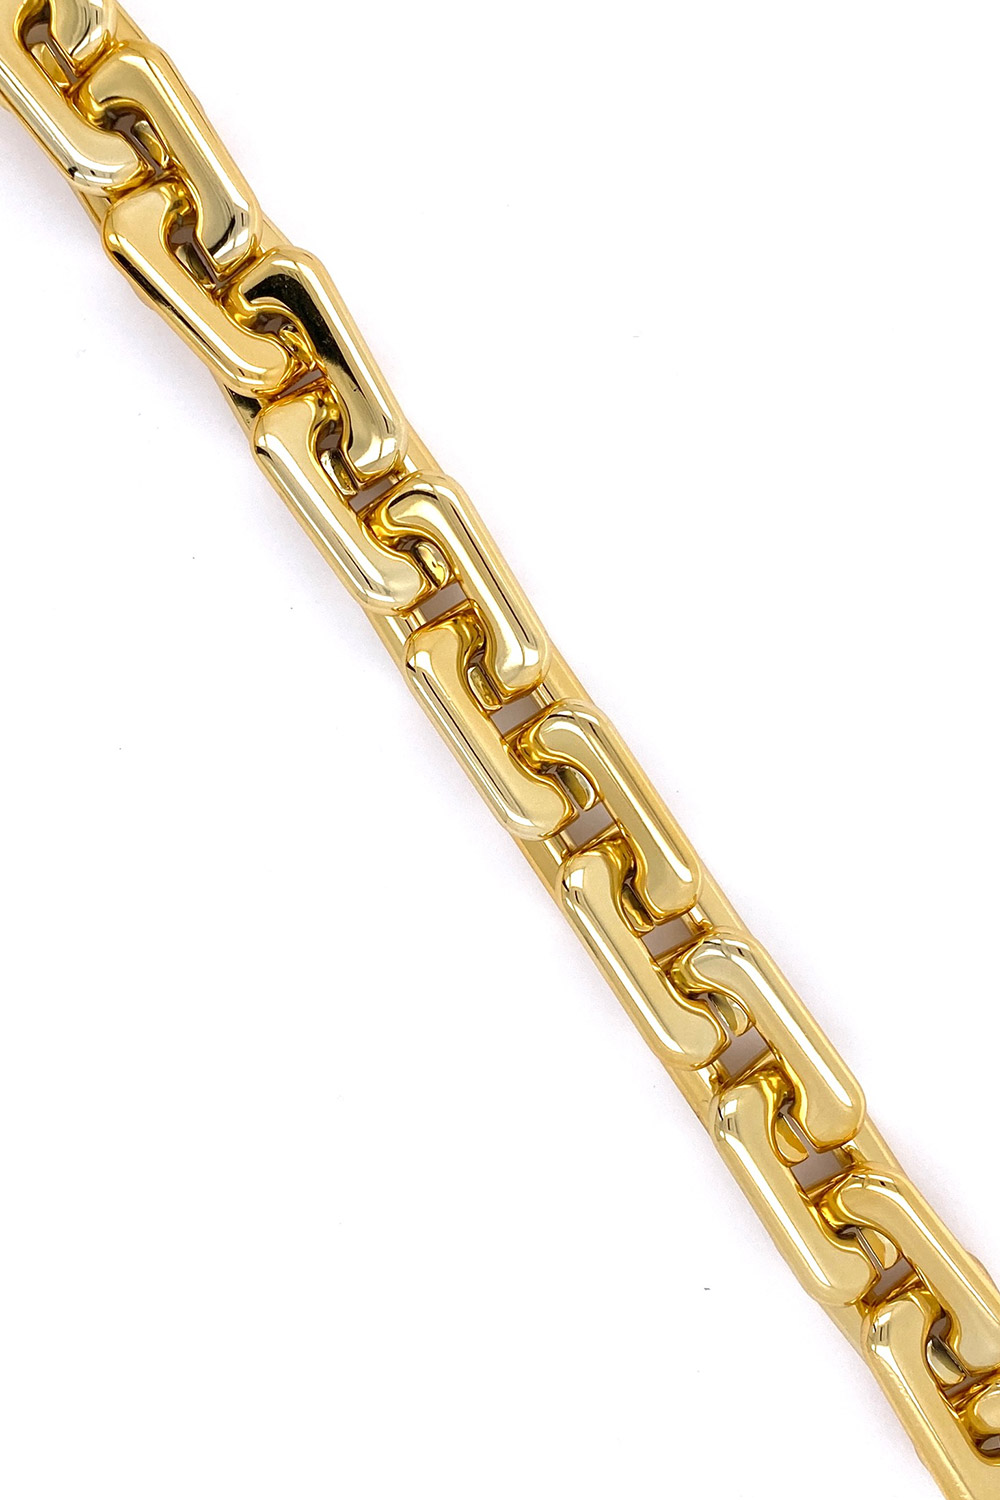 Gold Plastic Chain - thick 60cm